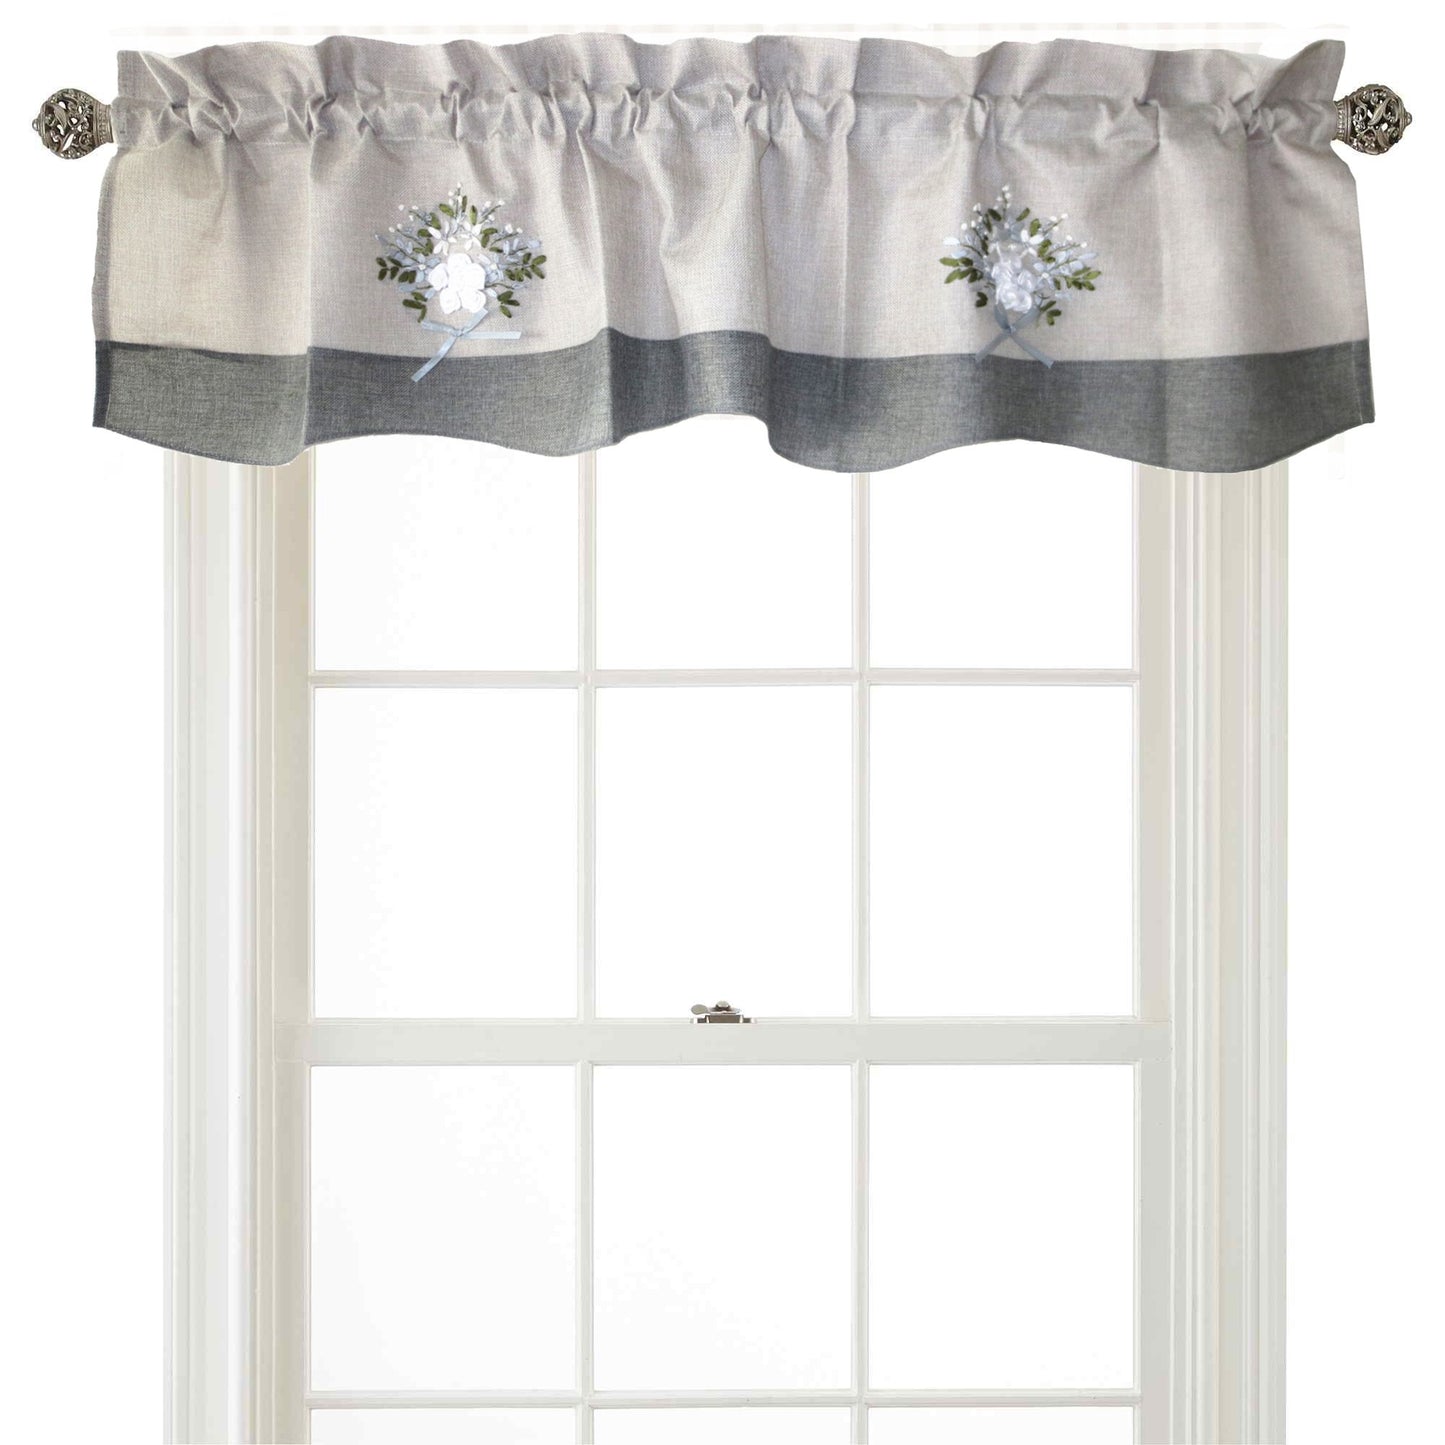 Artistic Decorative Burlap Decorative Window Treatment Rod Pocket Curtain Straight Valance